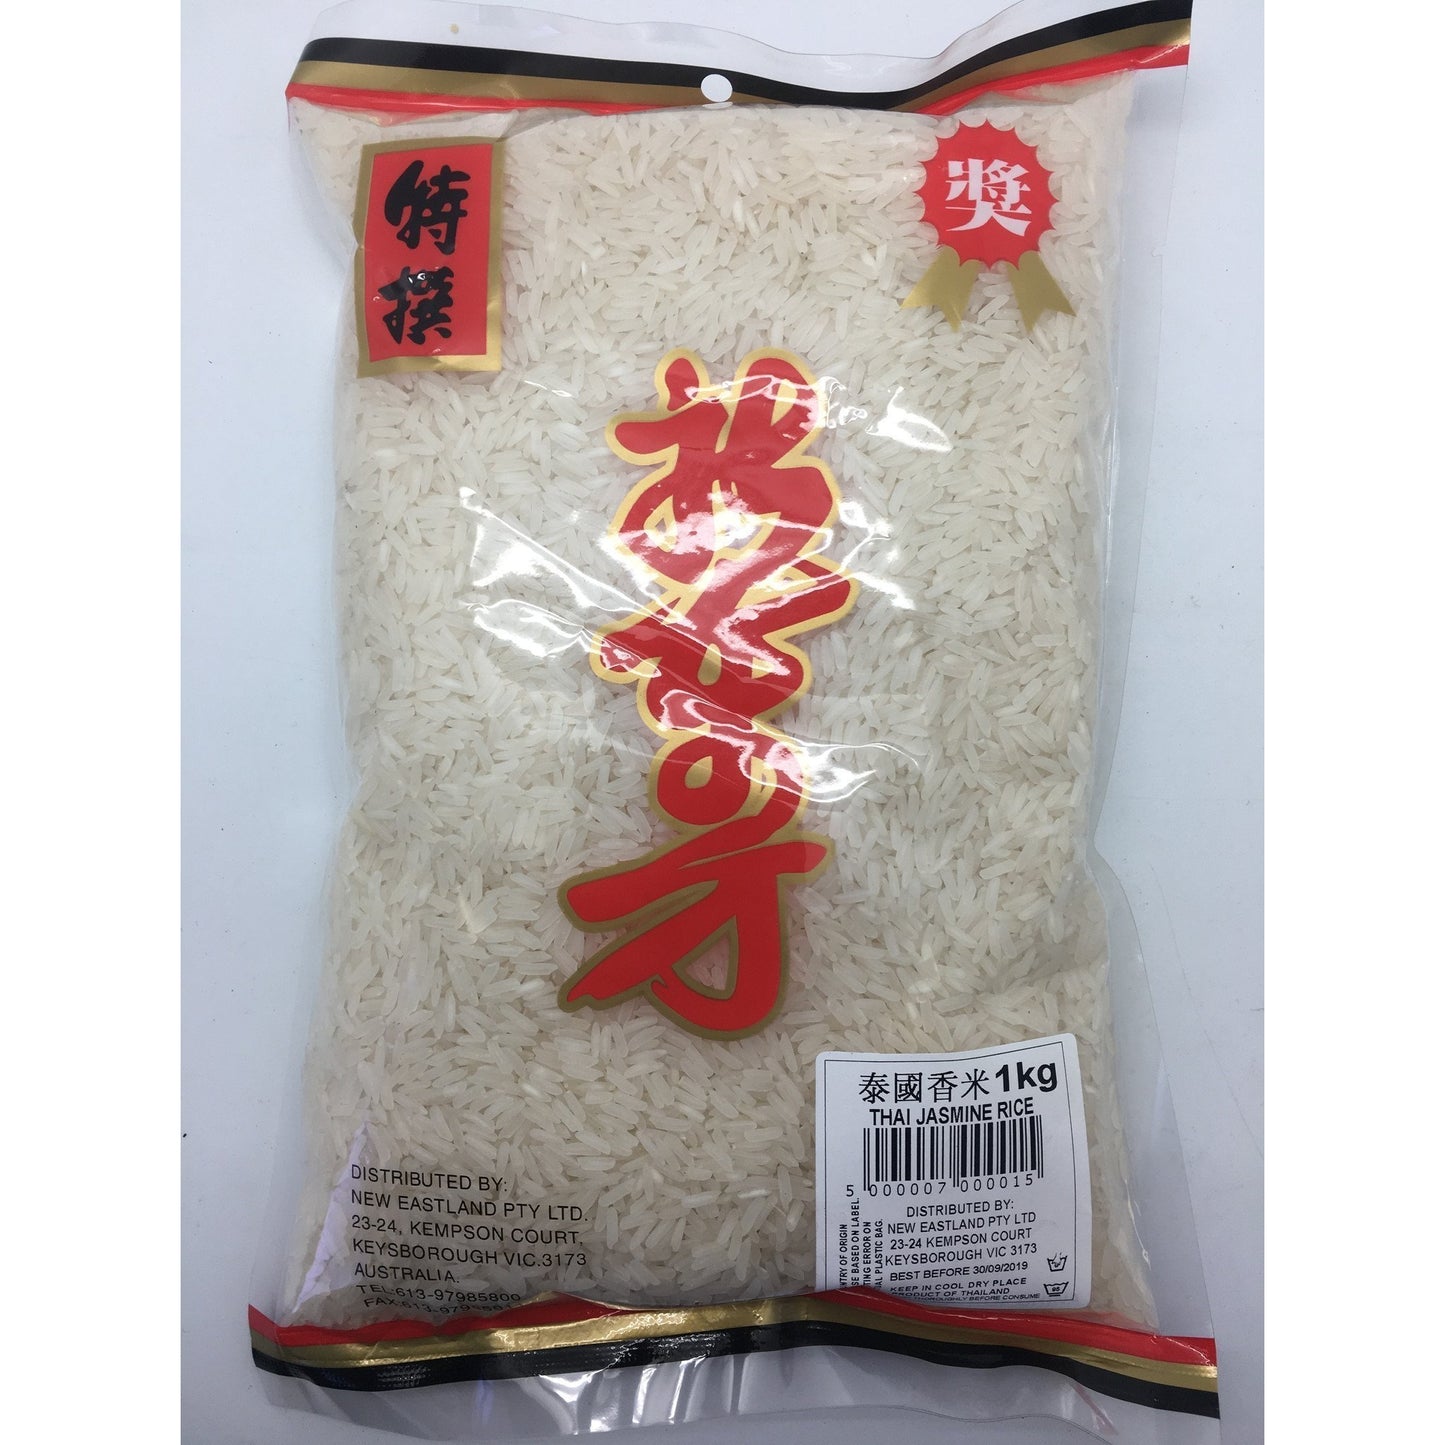 R001 New Eastland Brand - Thai Jasmine Rice 1kg - 25 bags / 1 CTN - New Eastland Pty Ltd - Asian food wholesalers